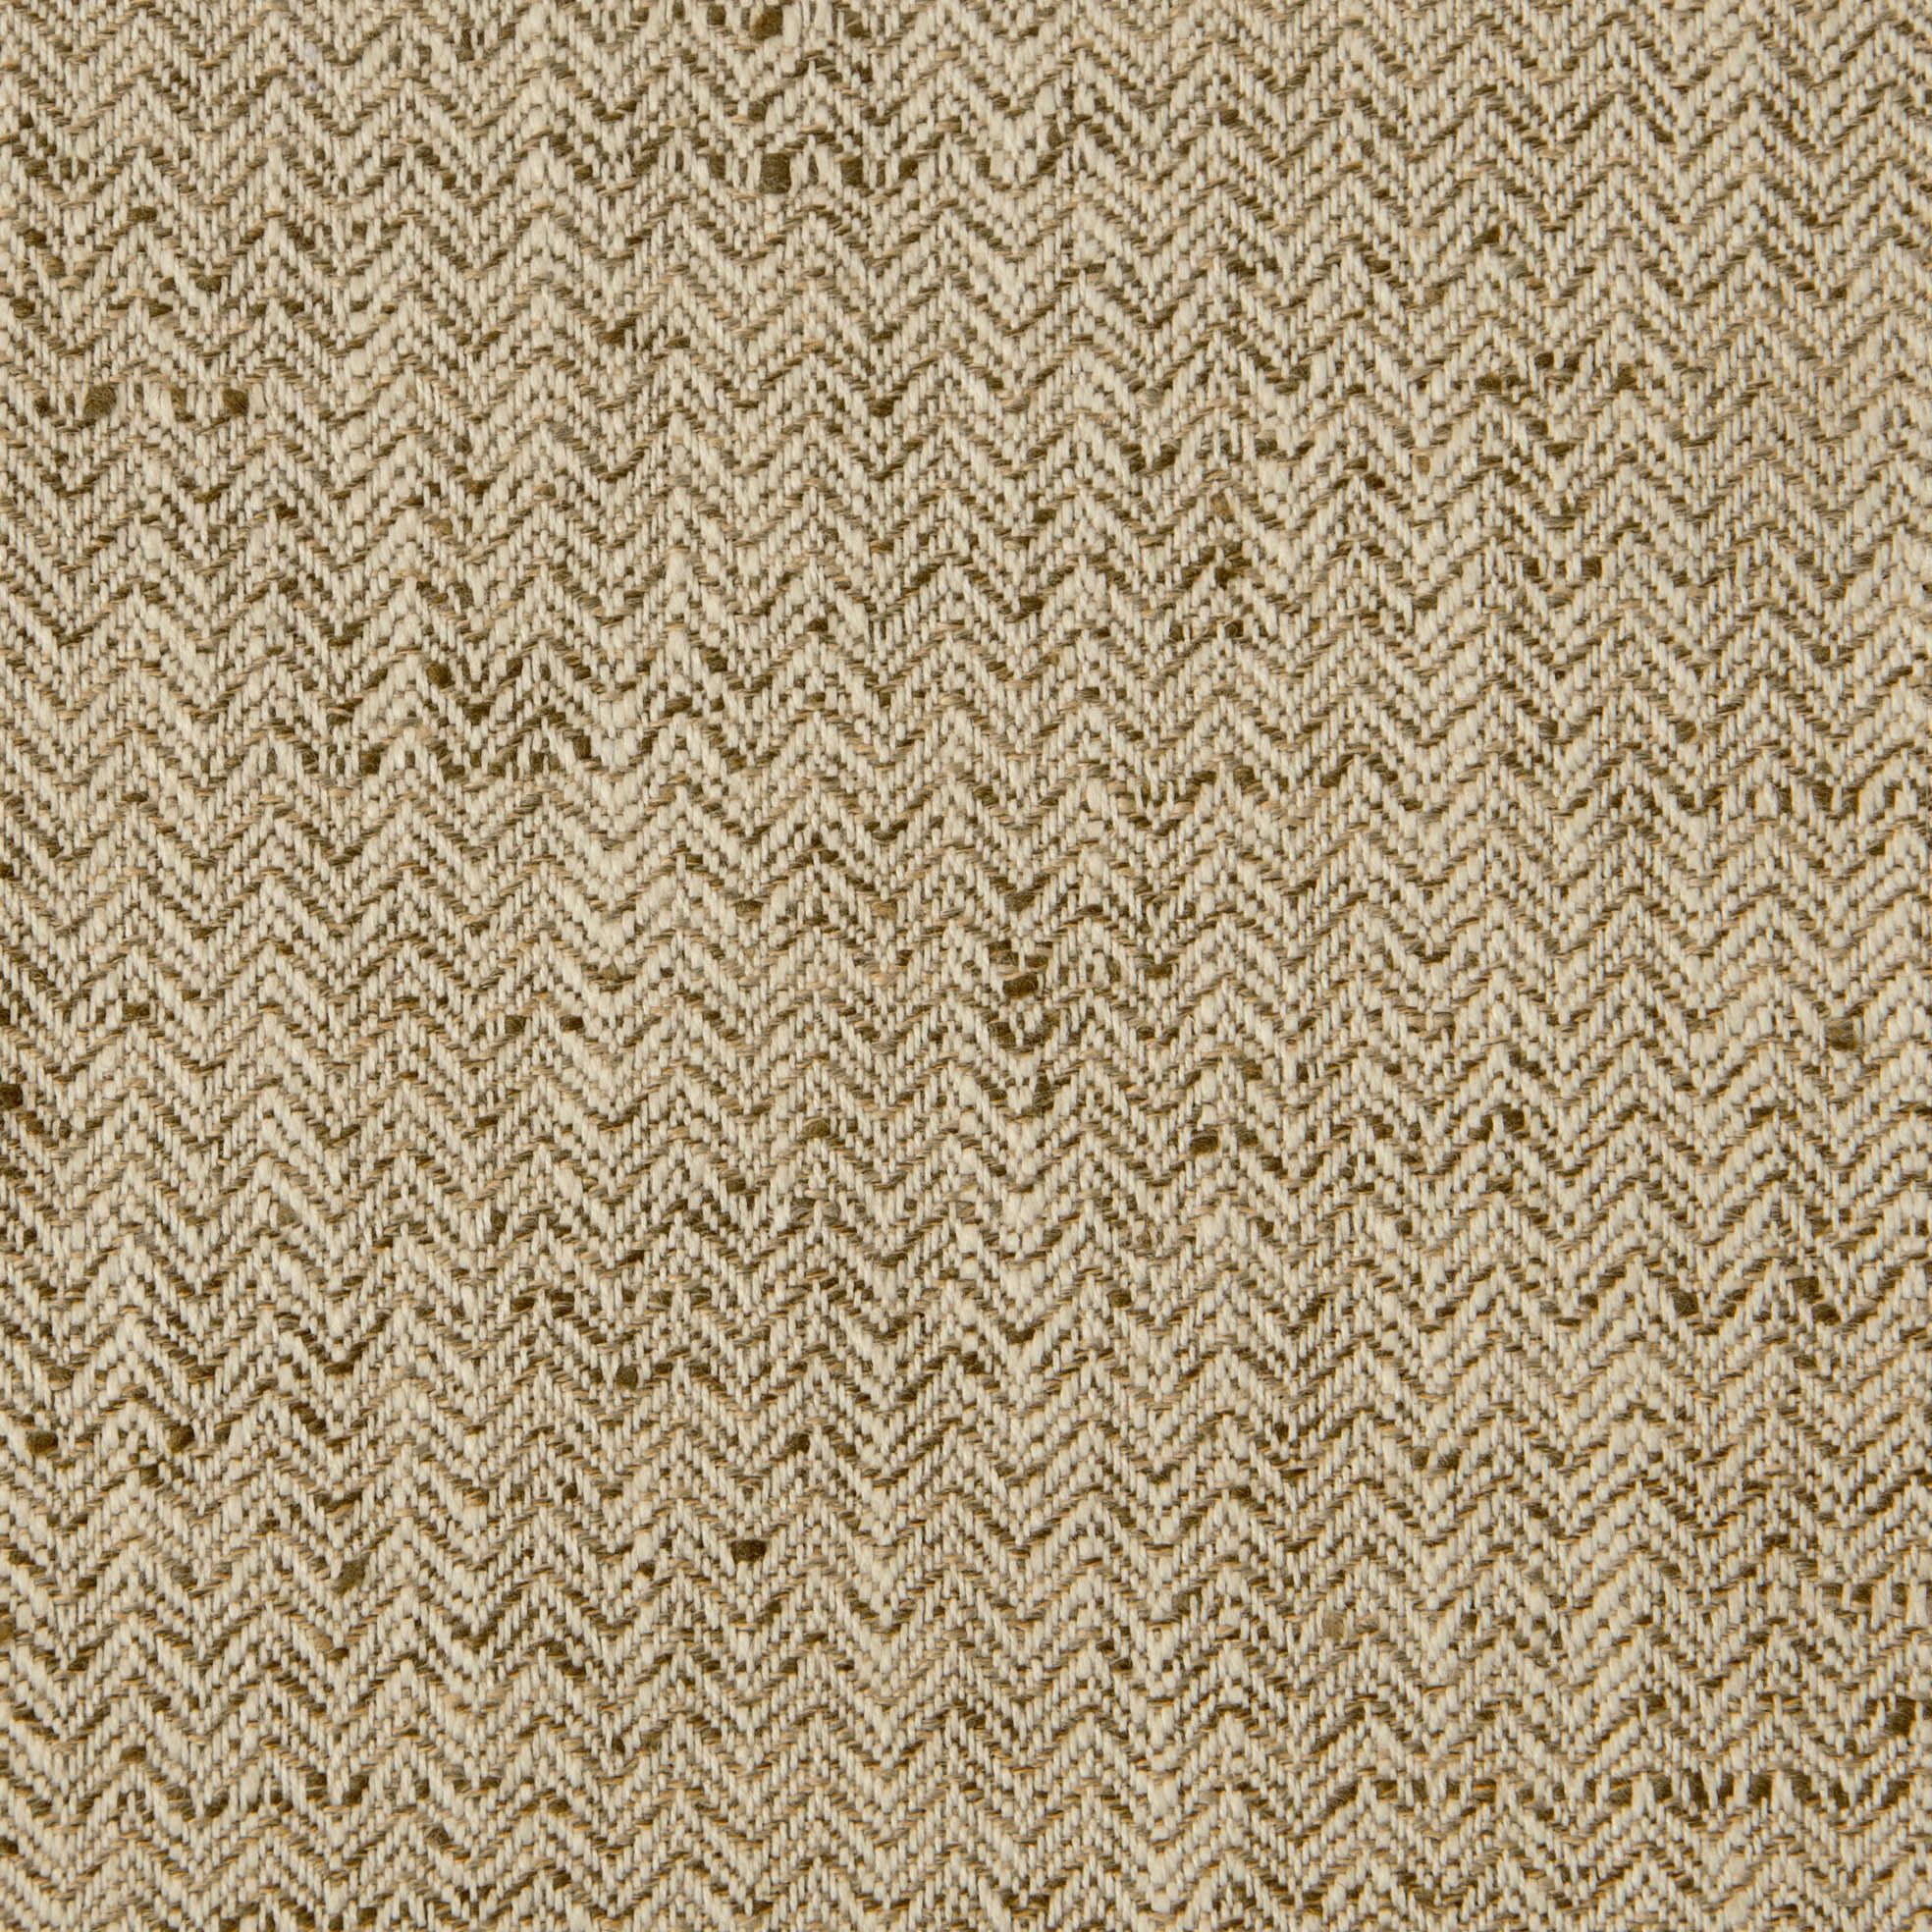 Sand Pine Fabric Swatch 15cm x 15cm